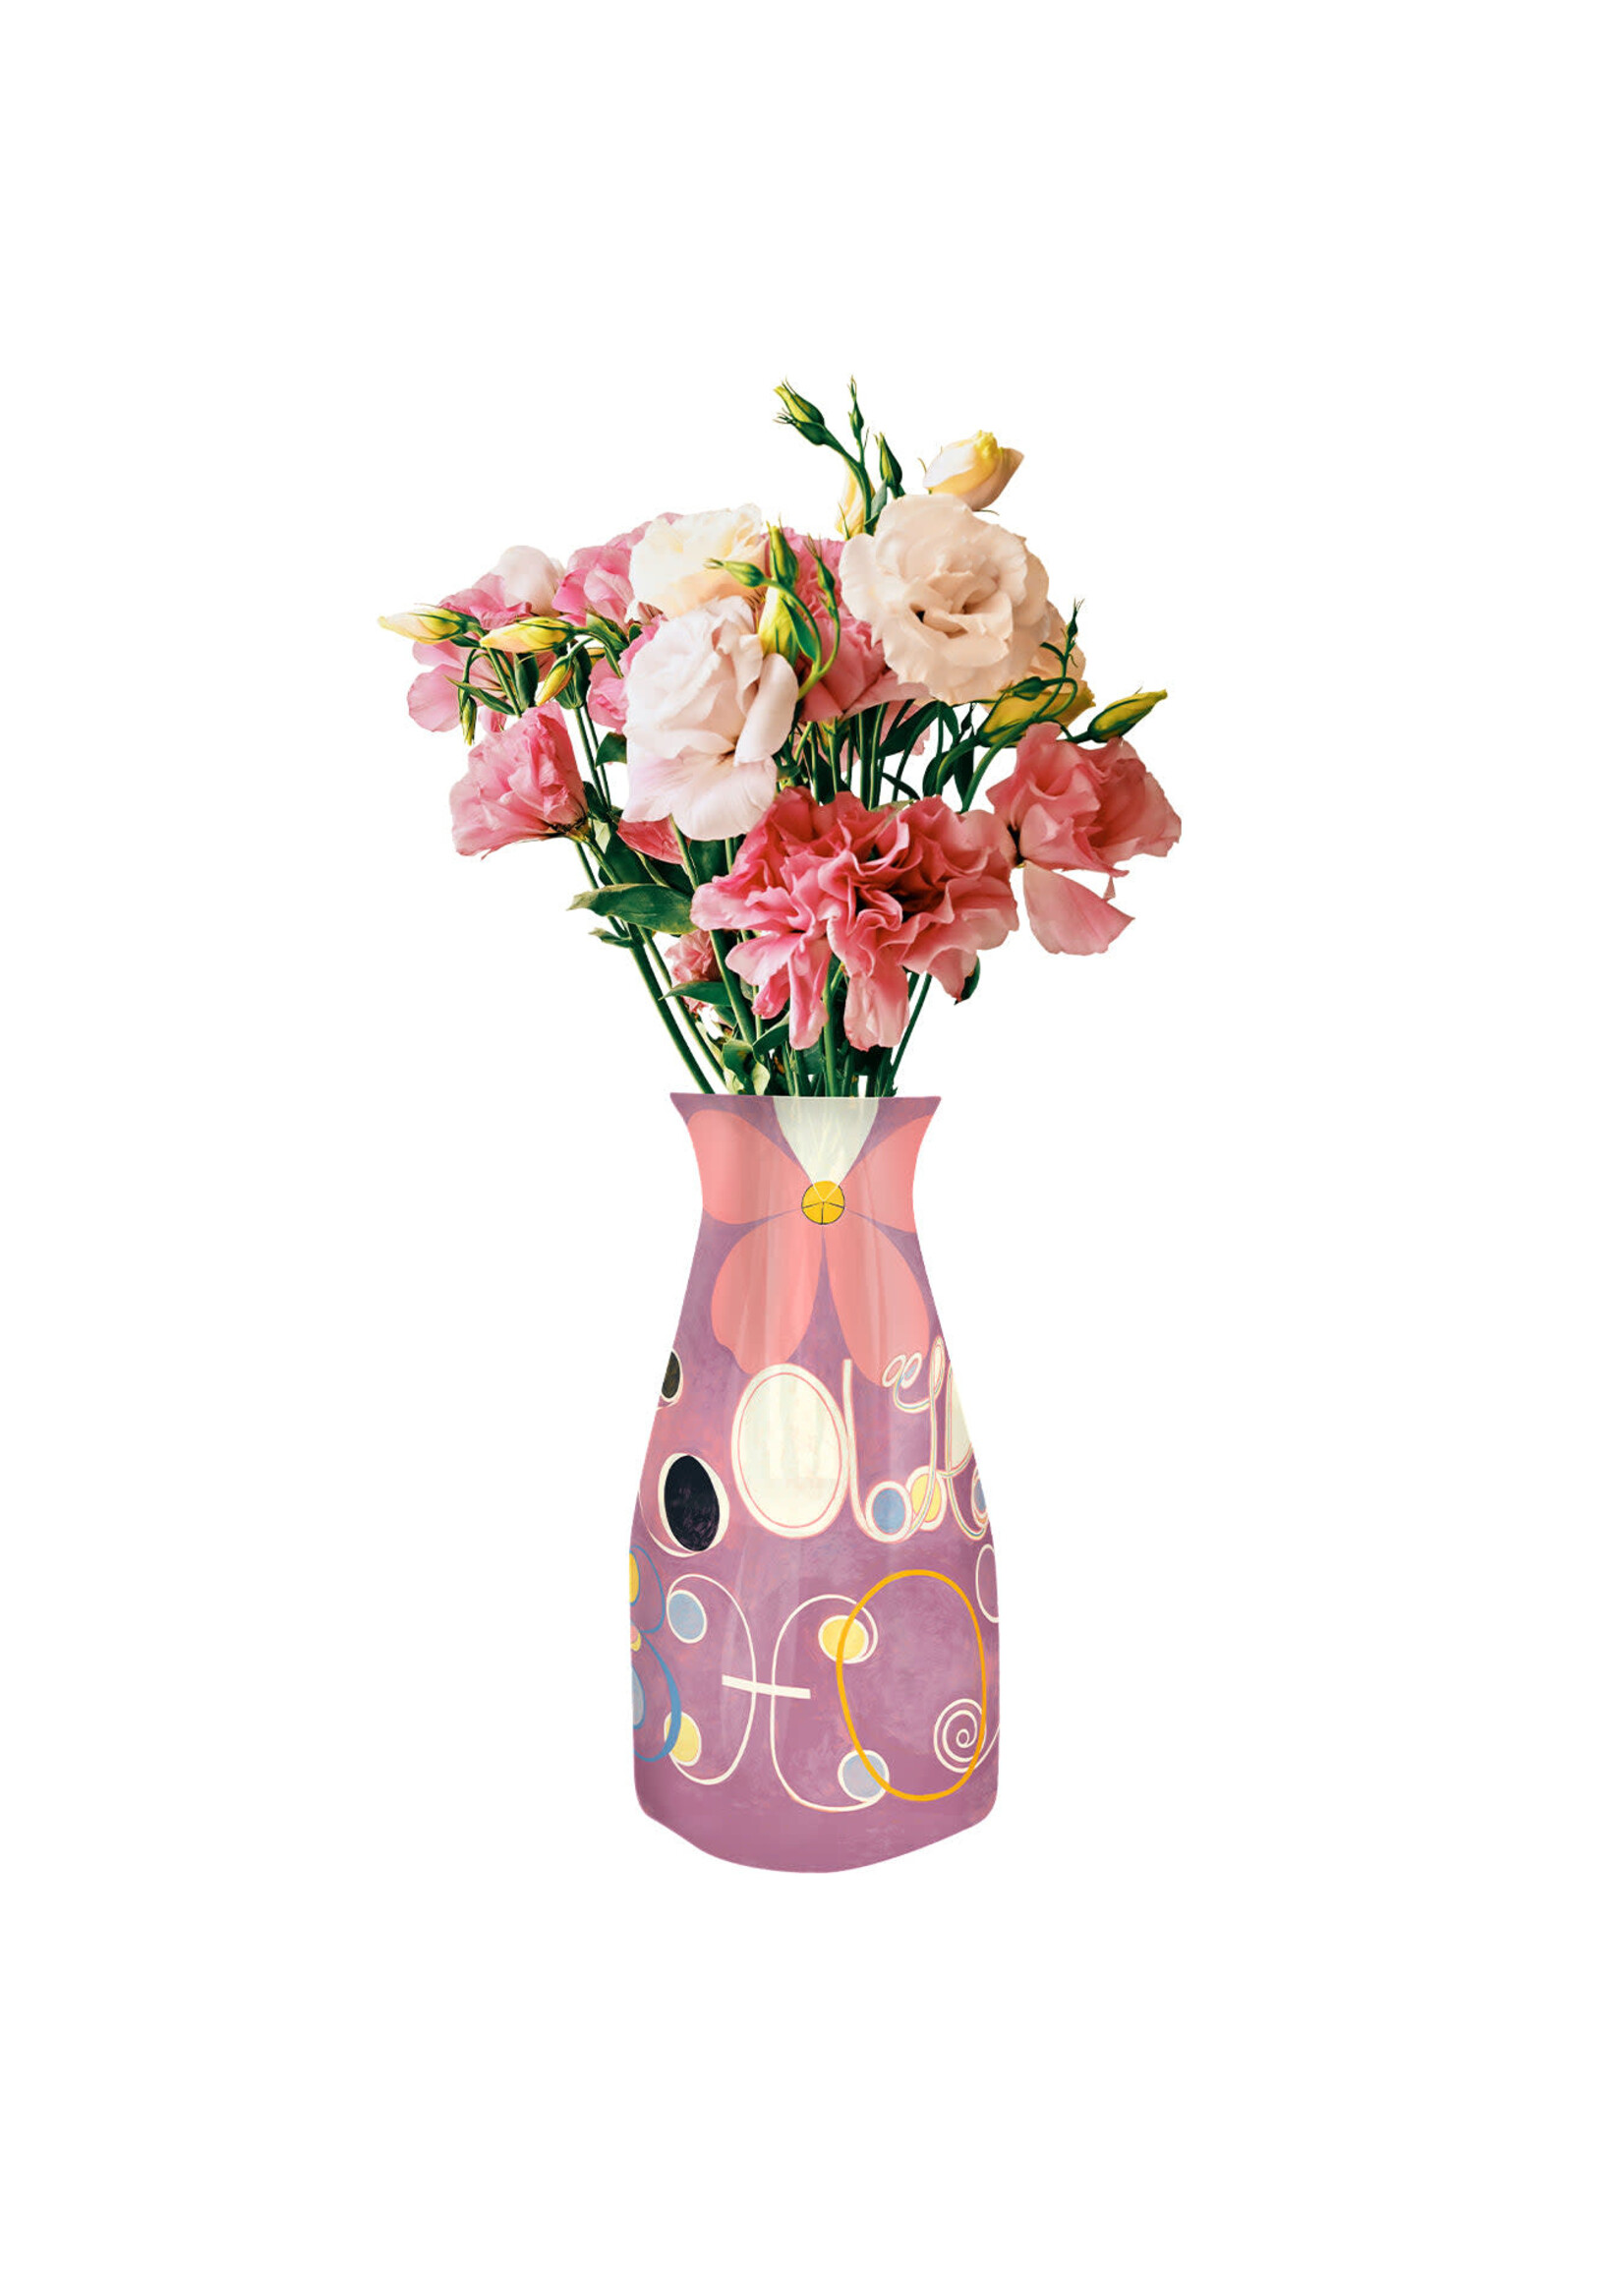 Modgy Hilma af Klint The Ten Largest Adulthood Vase